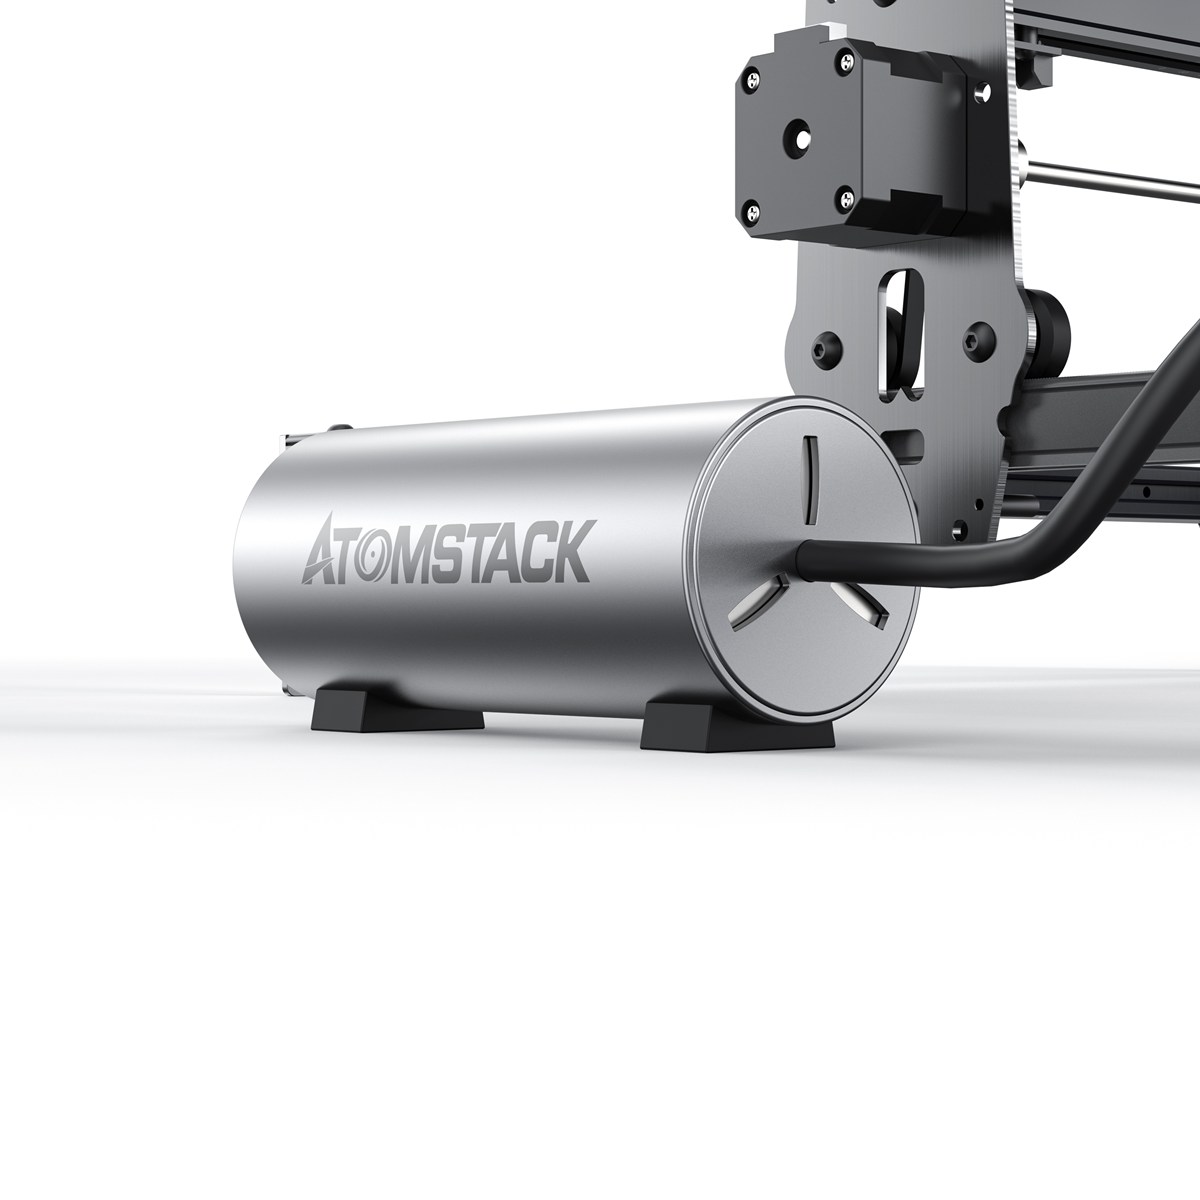 Atomstack-Air-Assist-System-for-Laser-Engraving-Machine-Laser-Cutting-Engraving-Air-assisted-Accesso-1932834-12